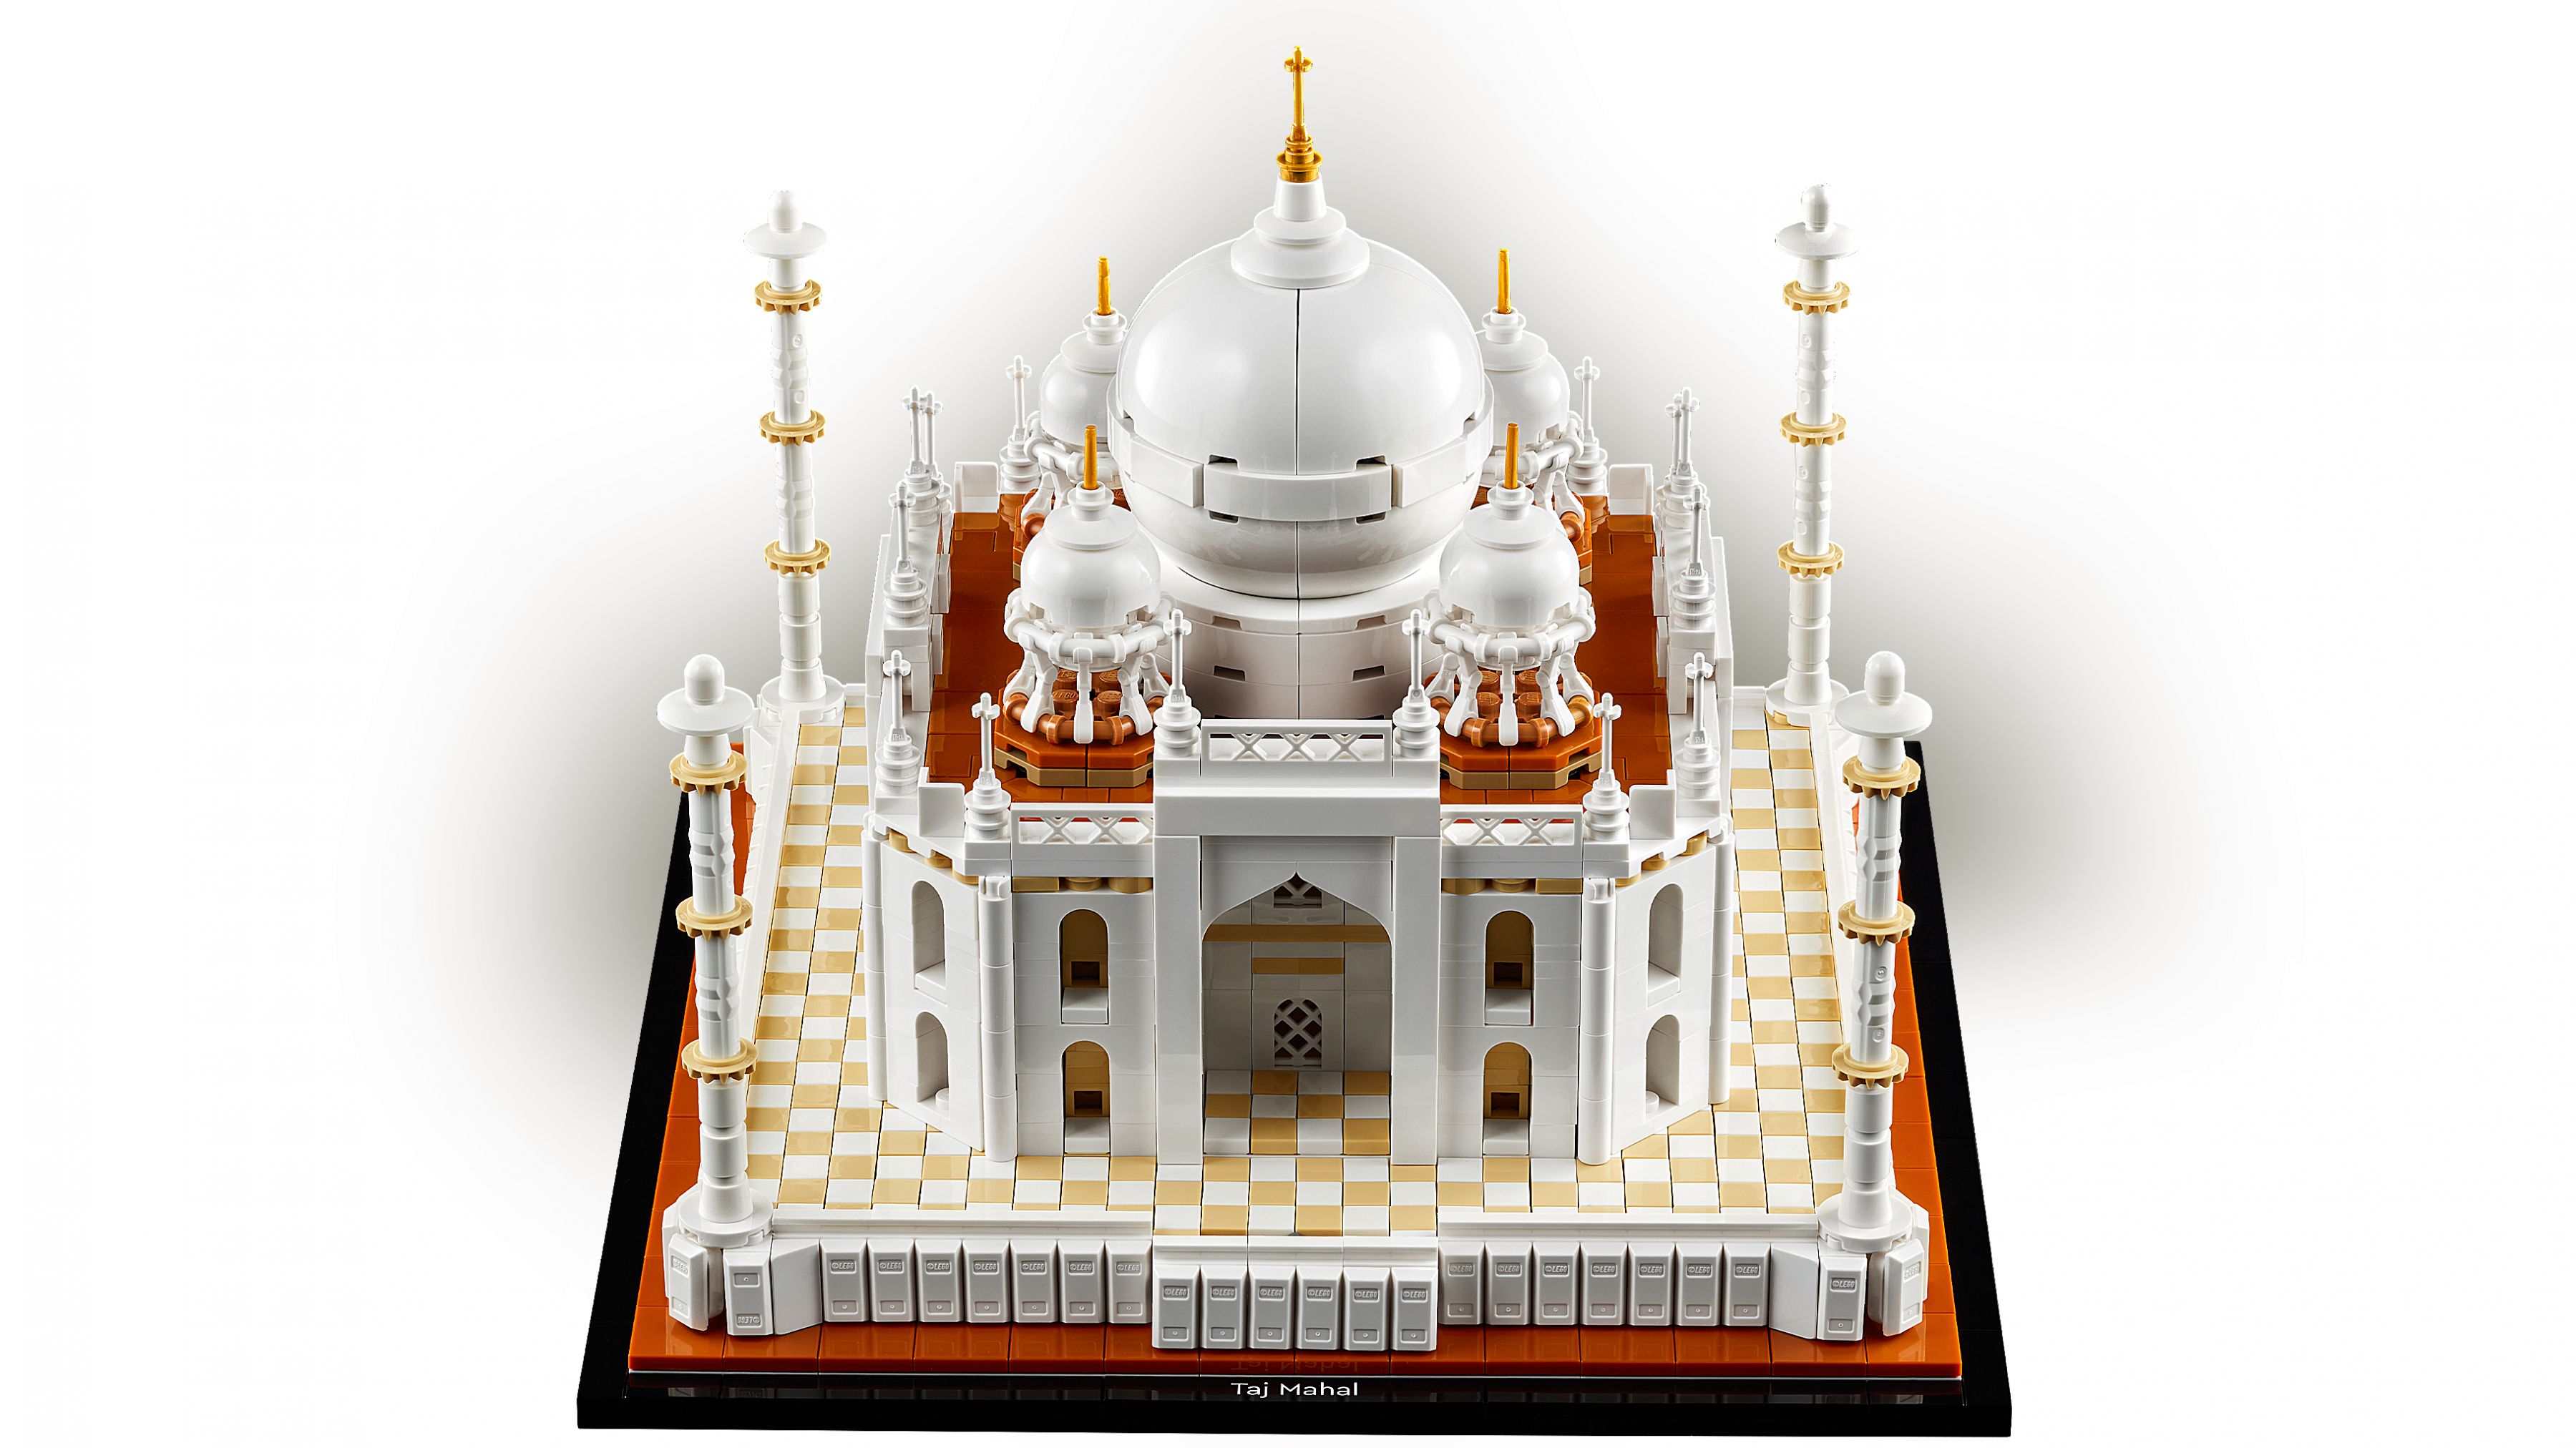 LEGO Architecture 21056 Taj Mahal LEGO_21056_web_sec02_nobg.jpg